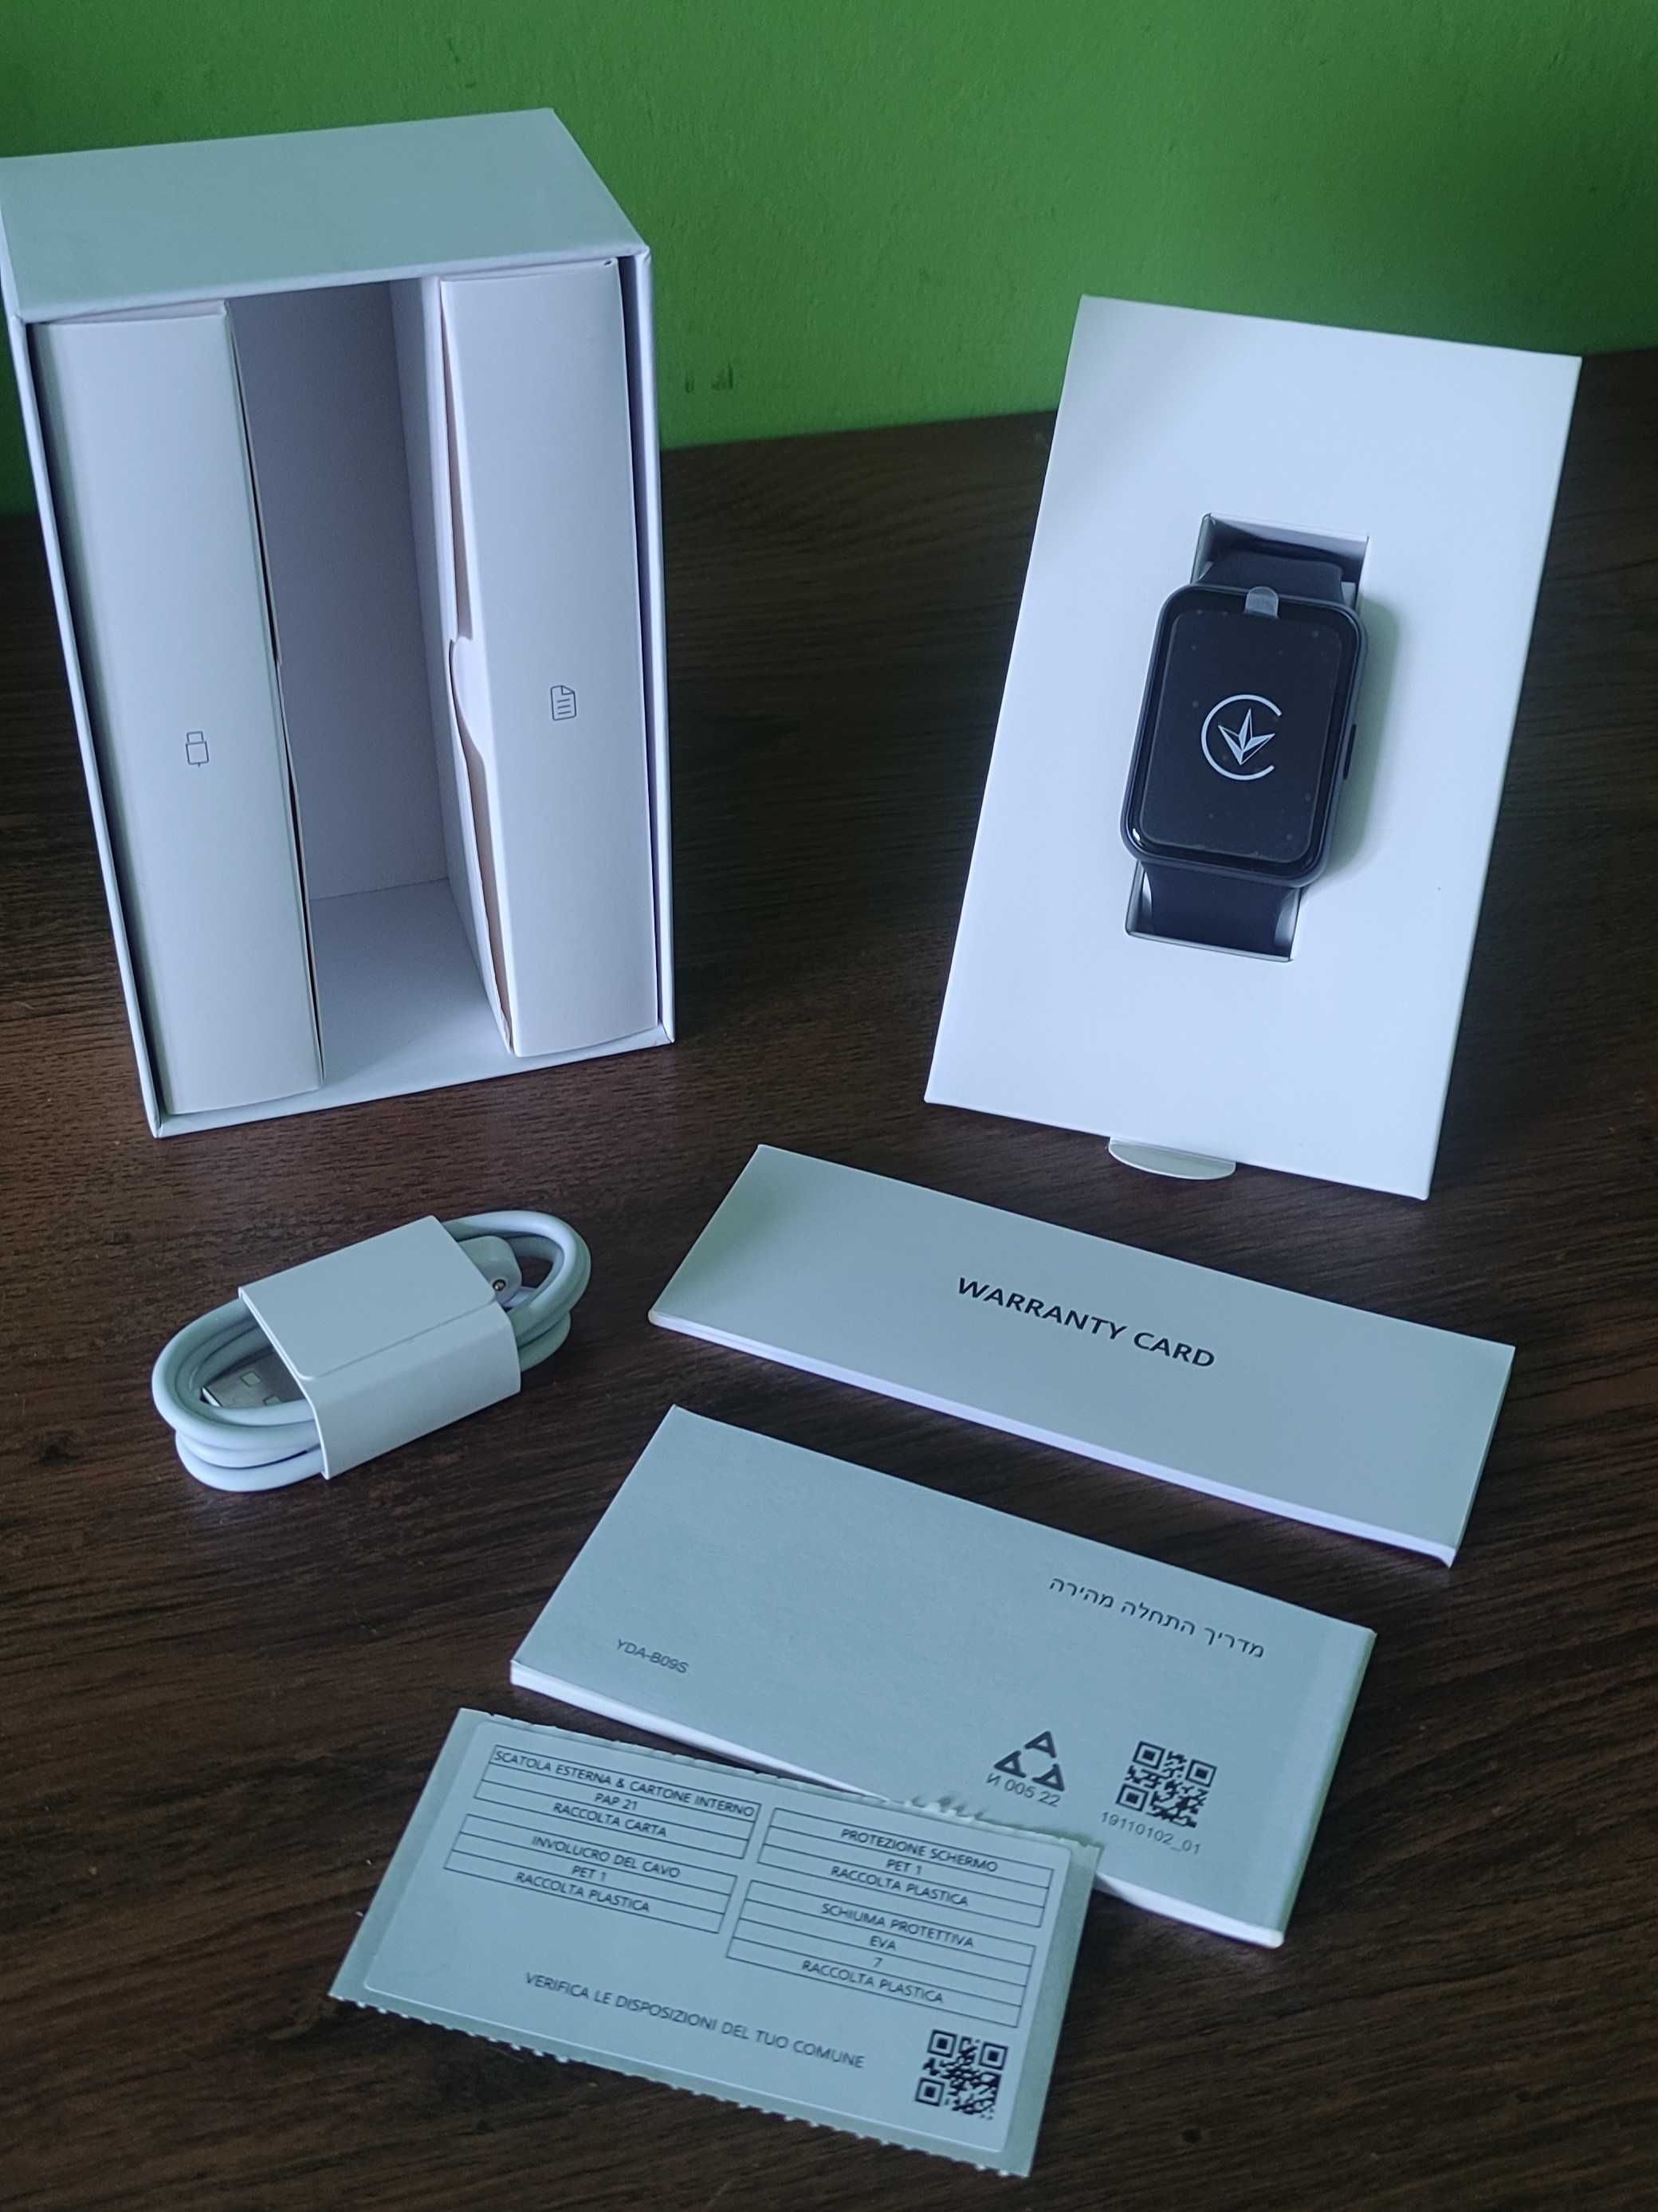 Huawei Watch Fit 2 rozpakowany